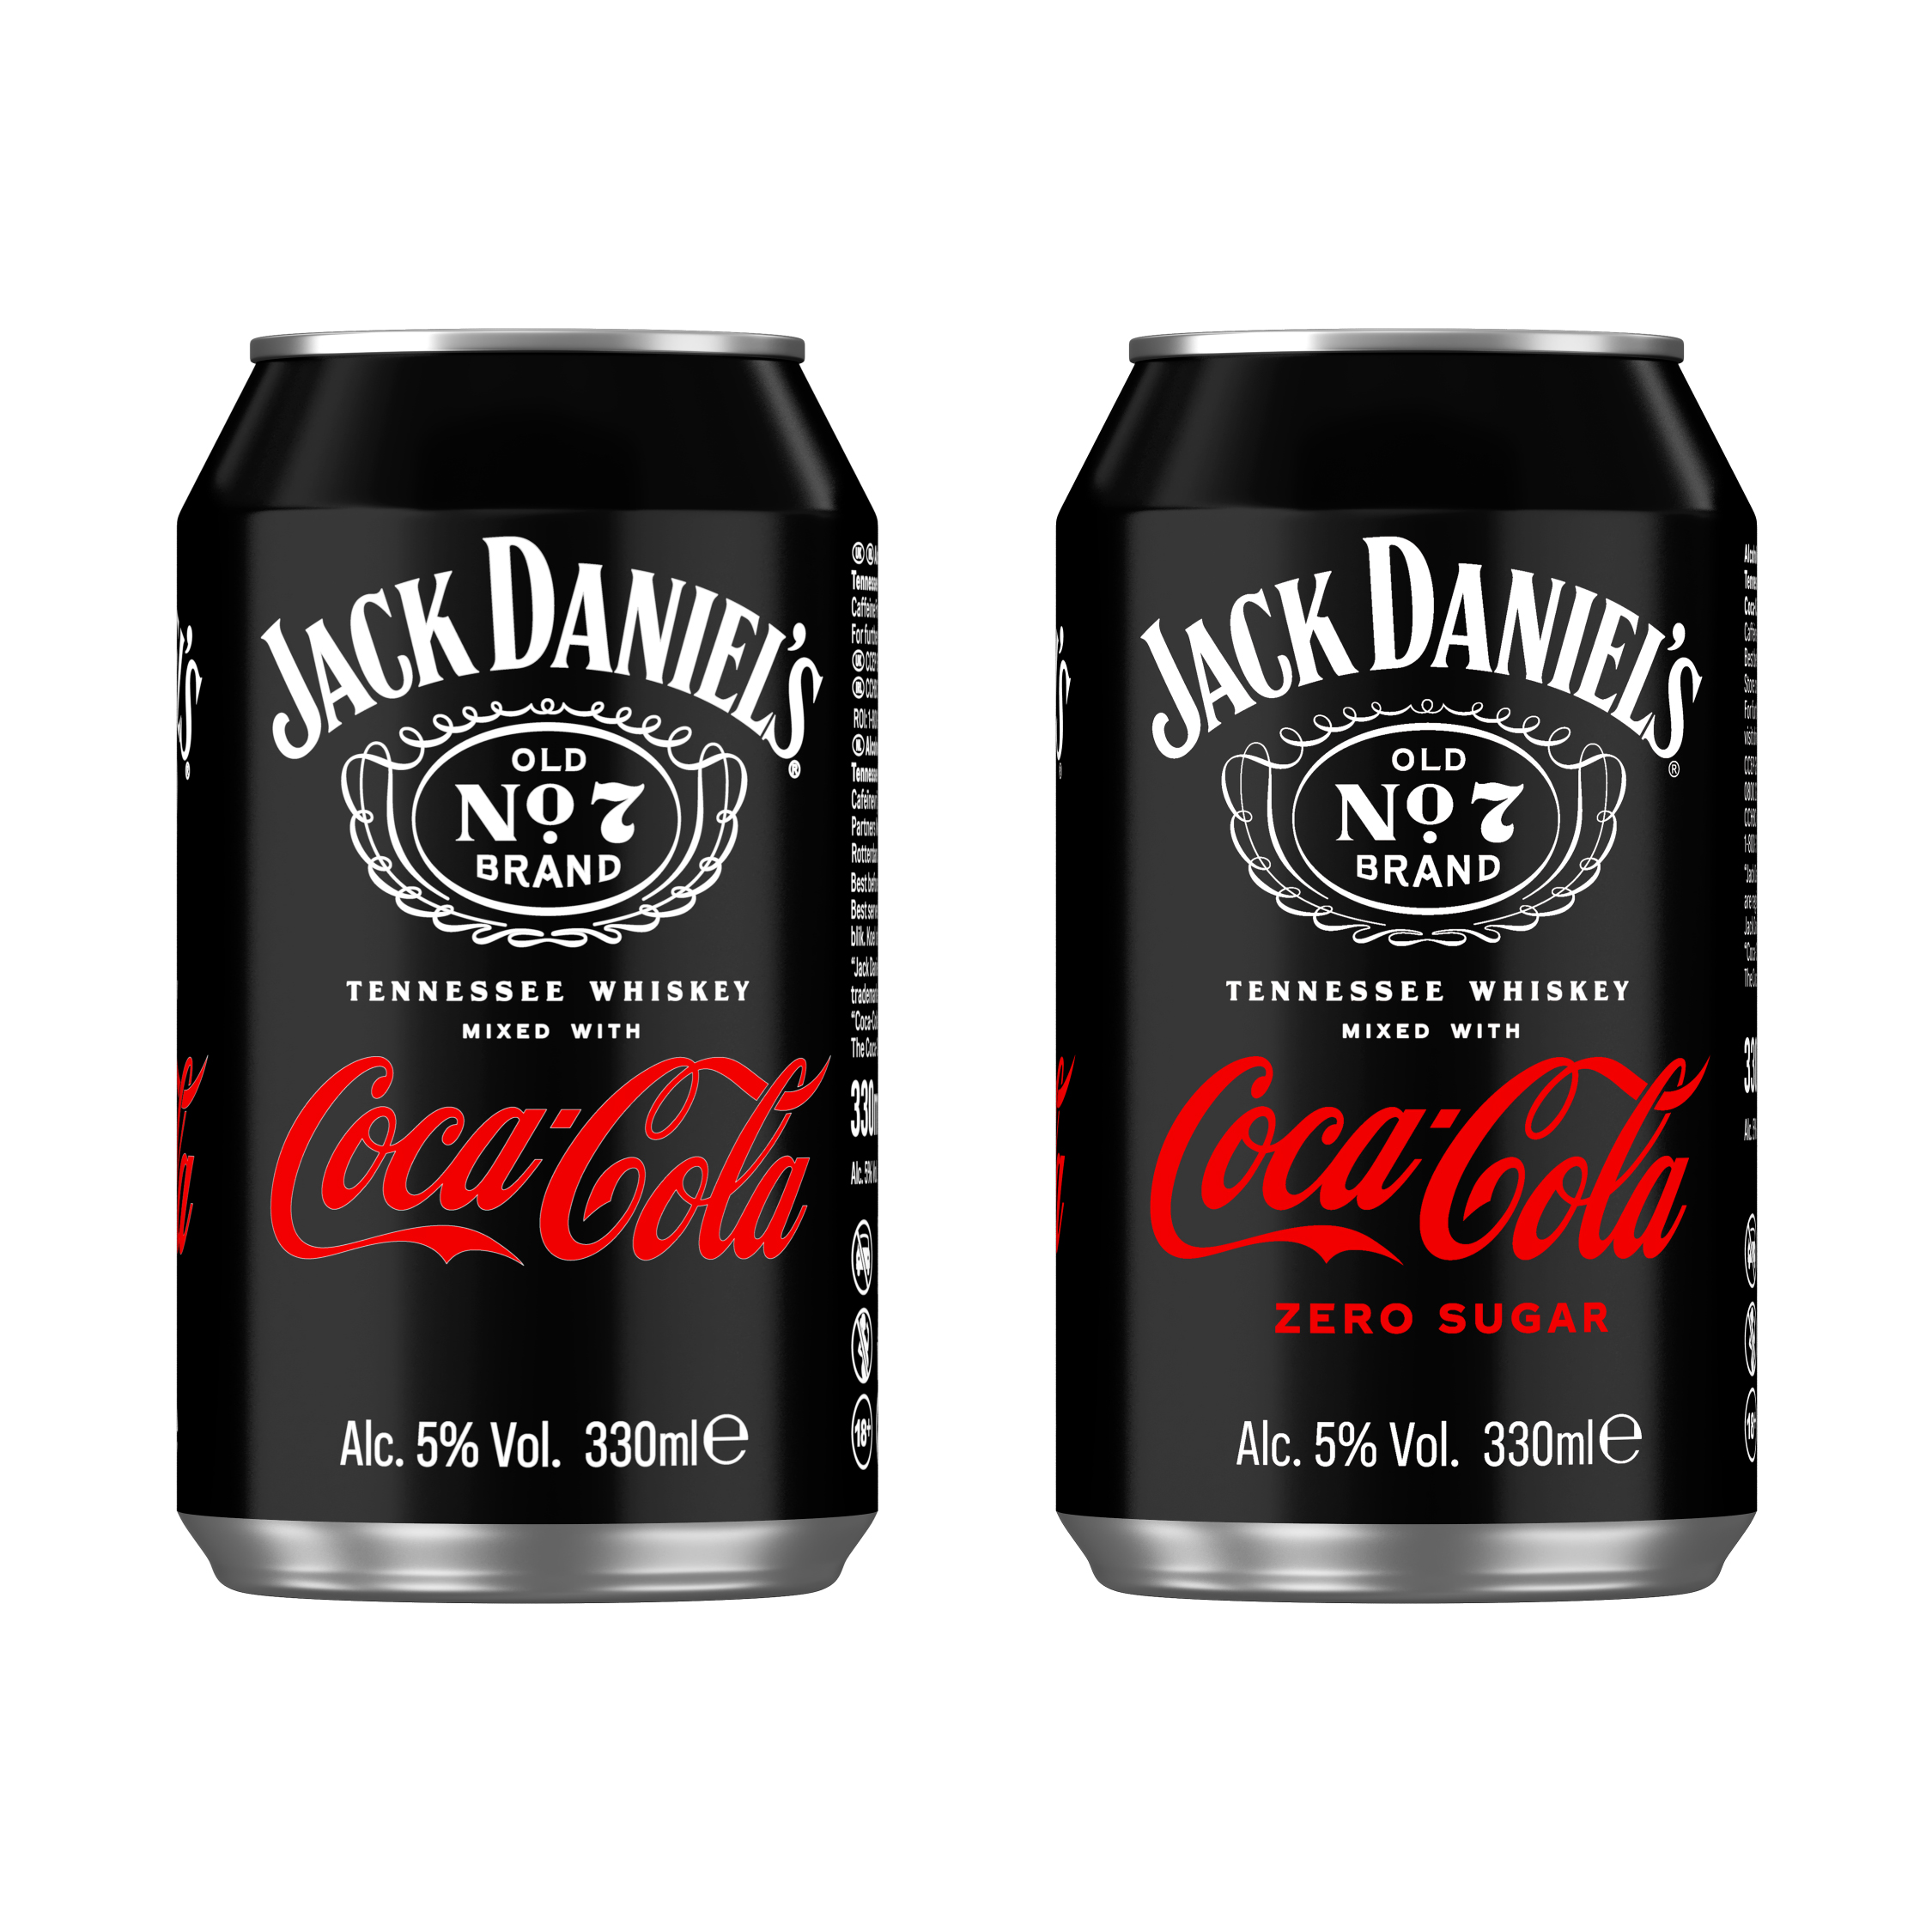 Jack Daniel’s and Coca-Cola RTD launches in GB